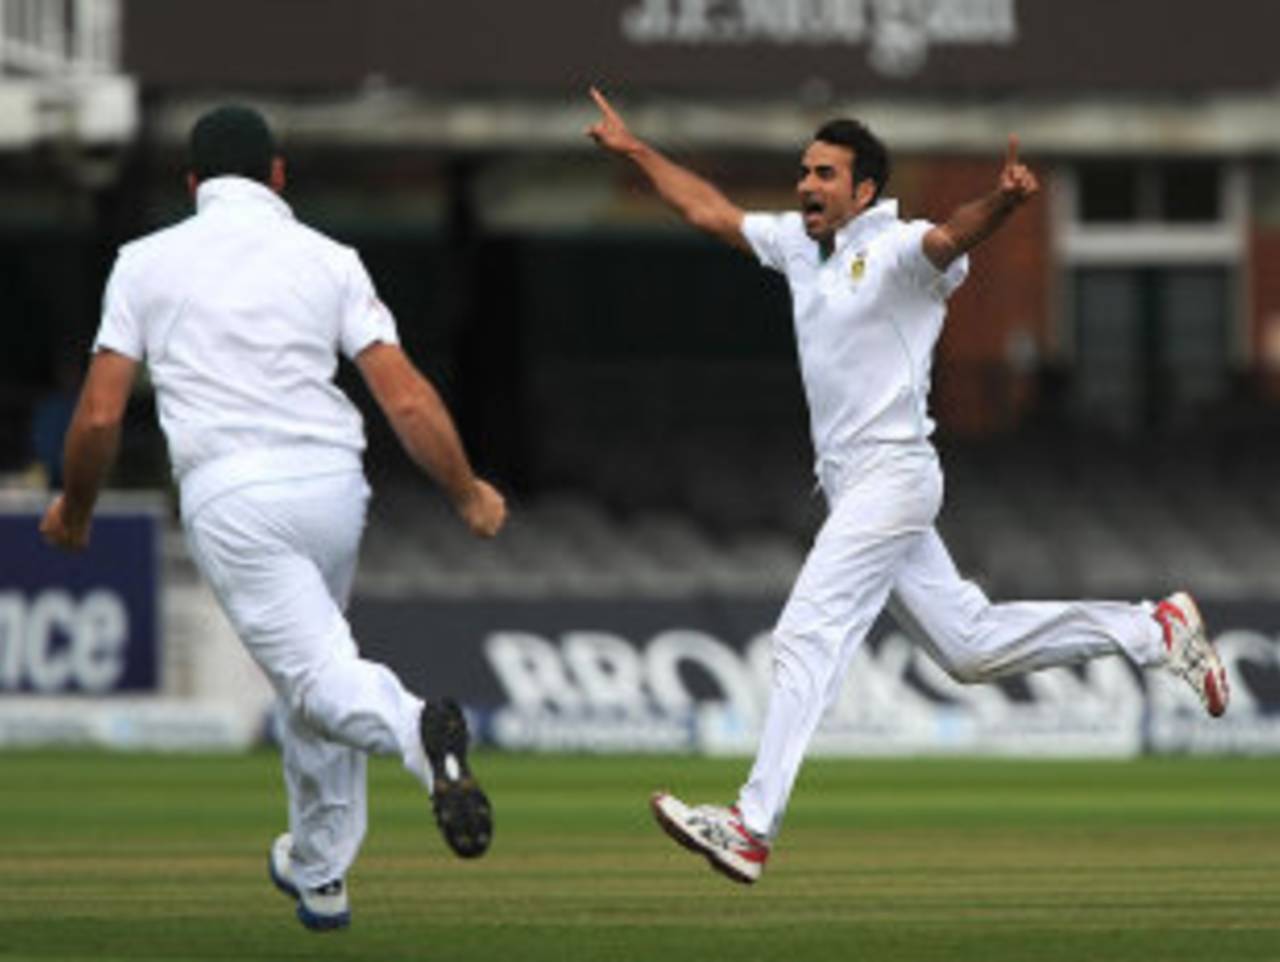 Imran Tahir charged off in his trademark celebration after bowling Jonny Bairstow&nbsp;&nbsp;&bull;&nbsp;&nbsp;PA Photos